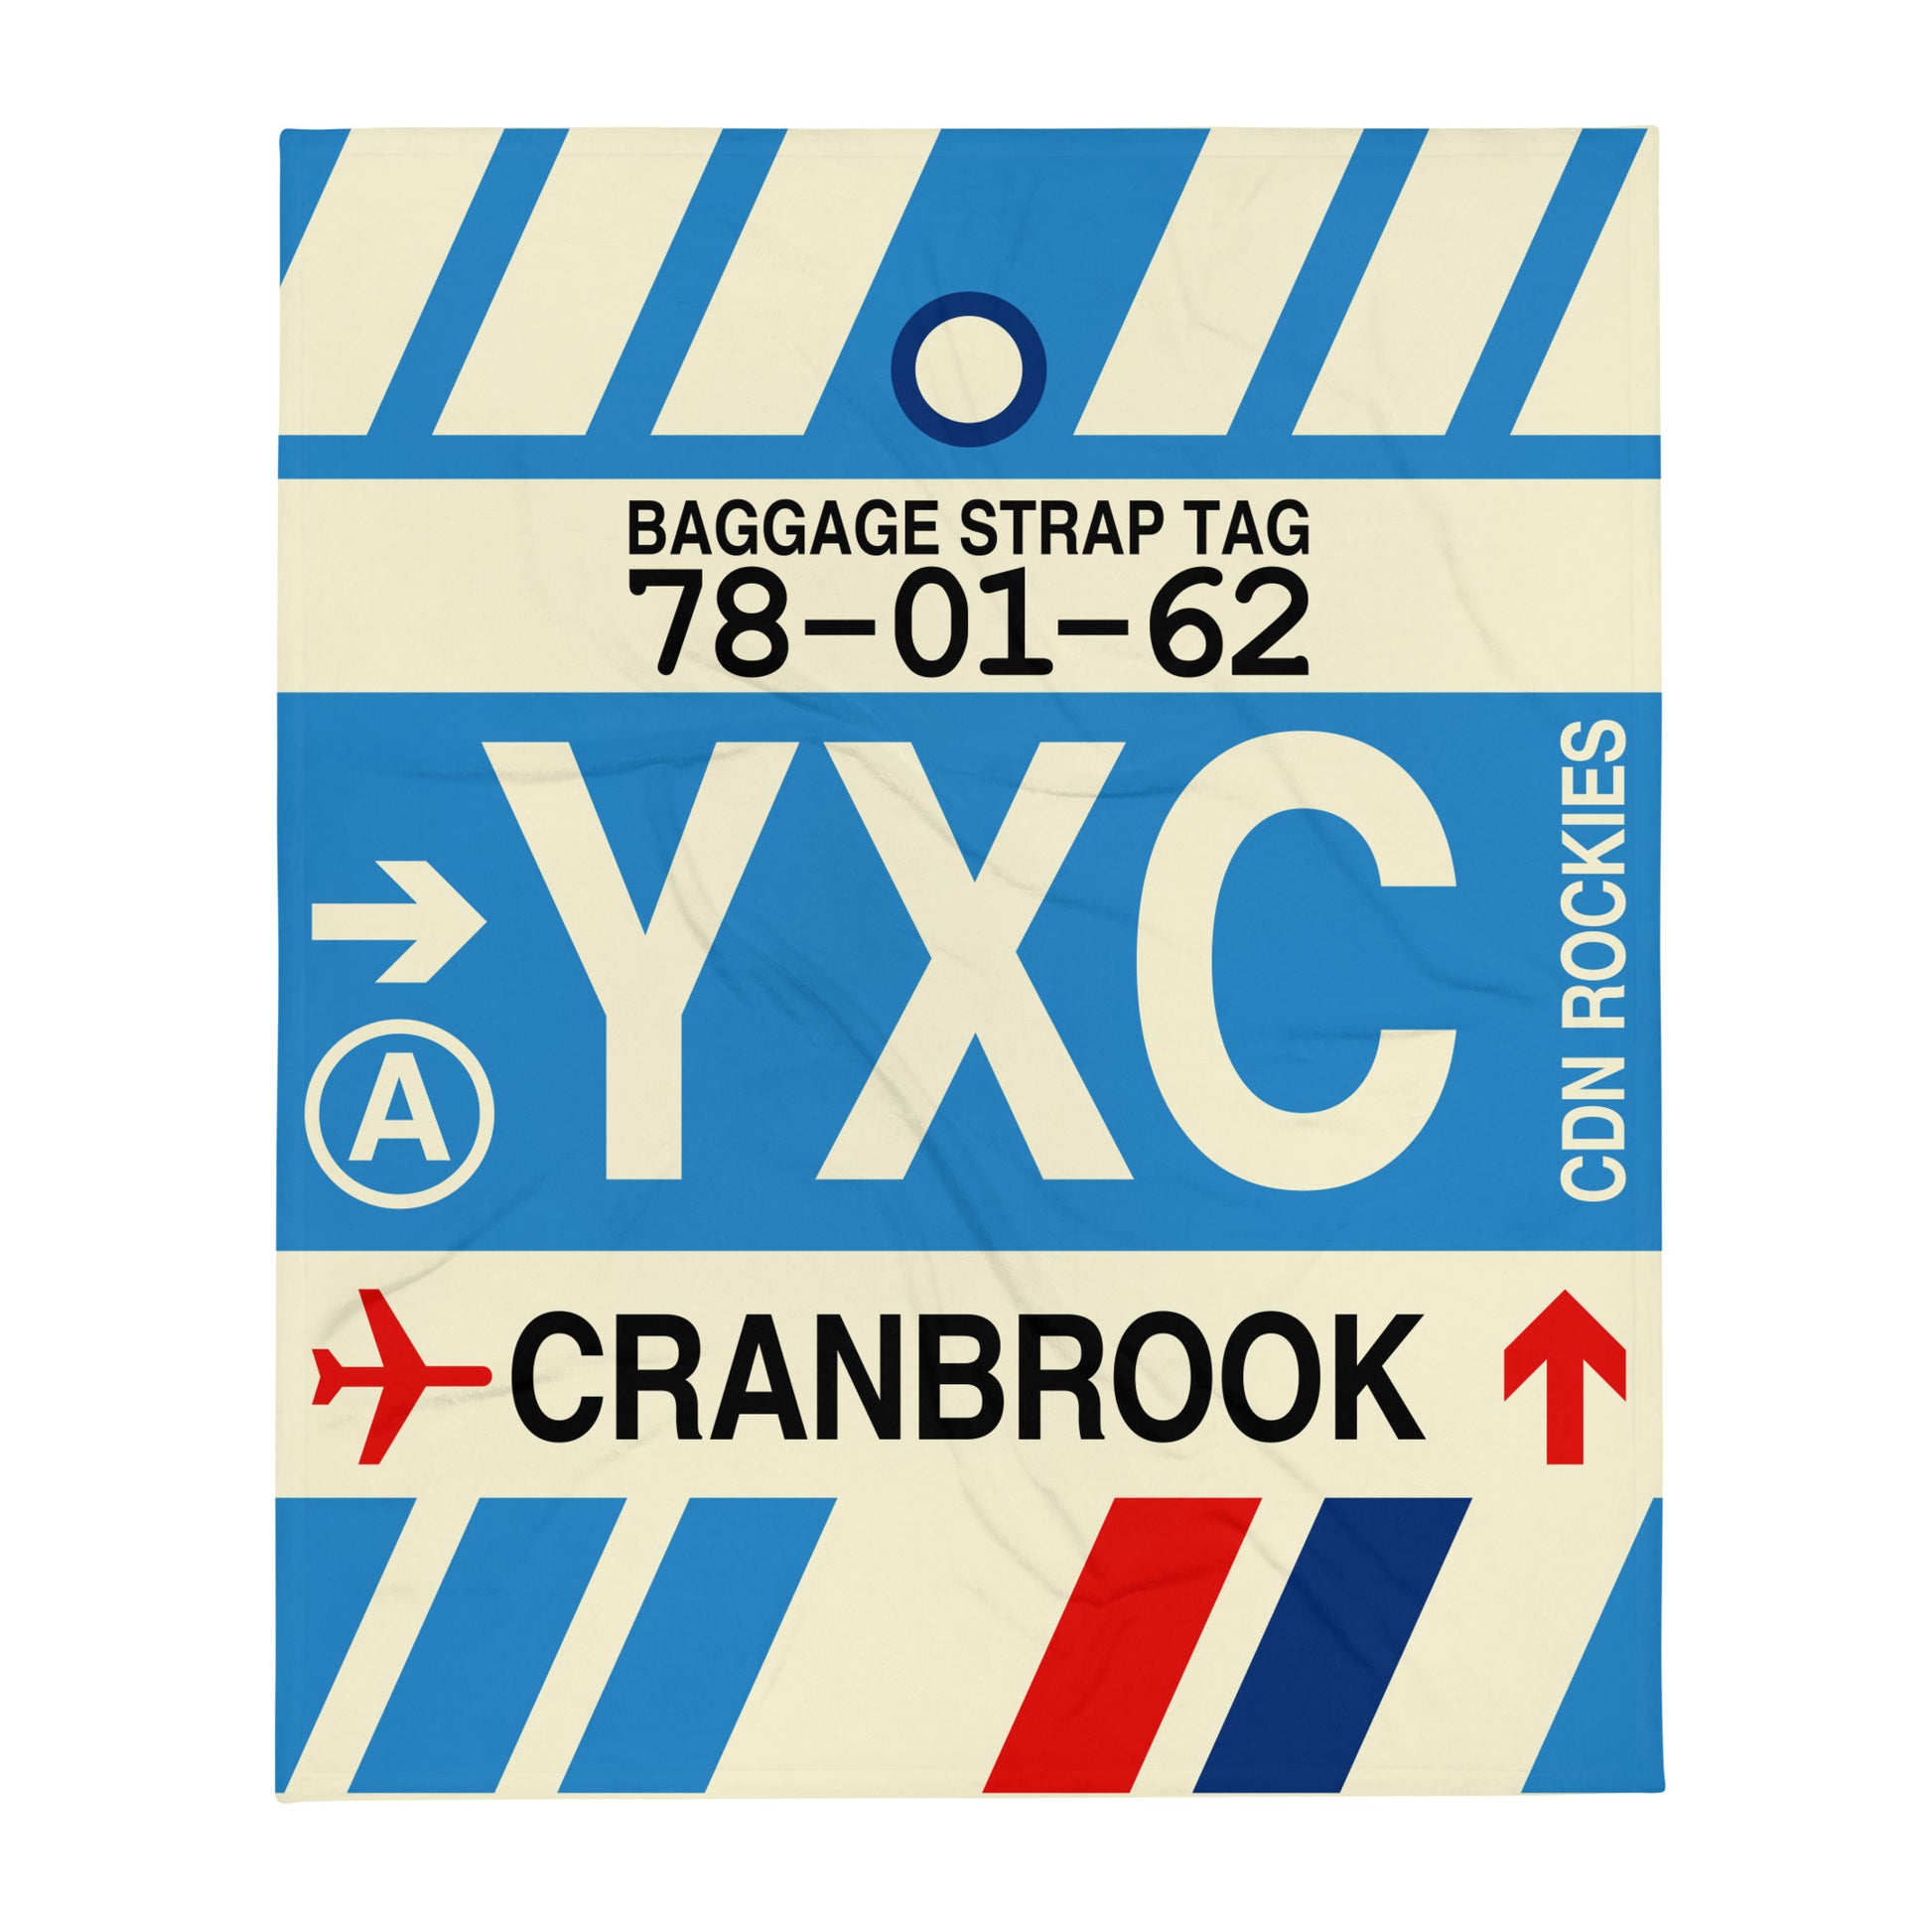 Travel Gift Throw Blanket • YXC Cranbrook • YHM Designs - Image 01